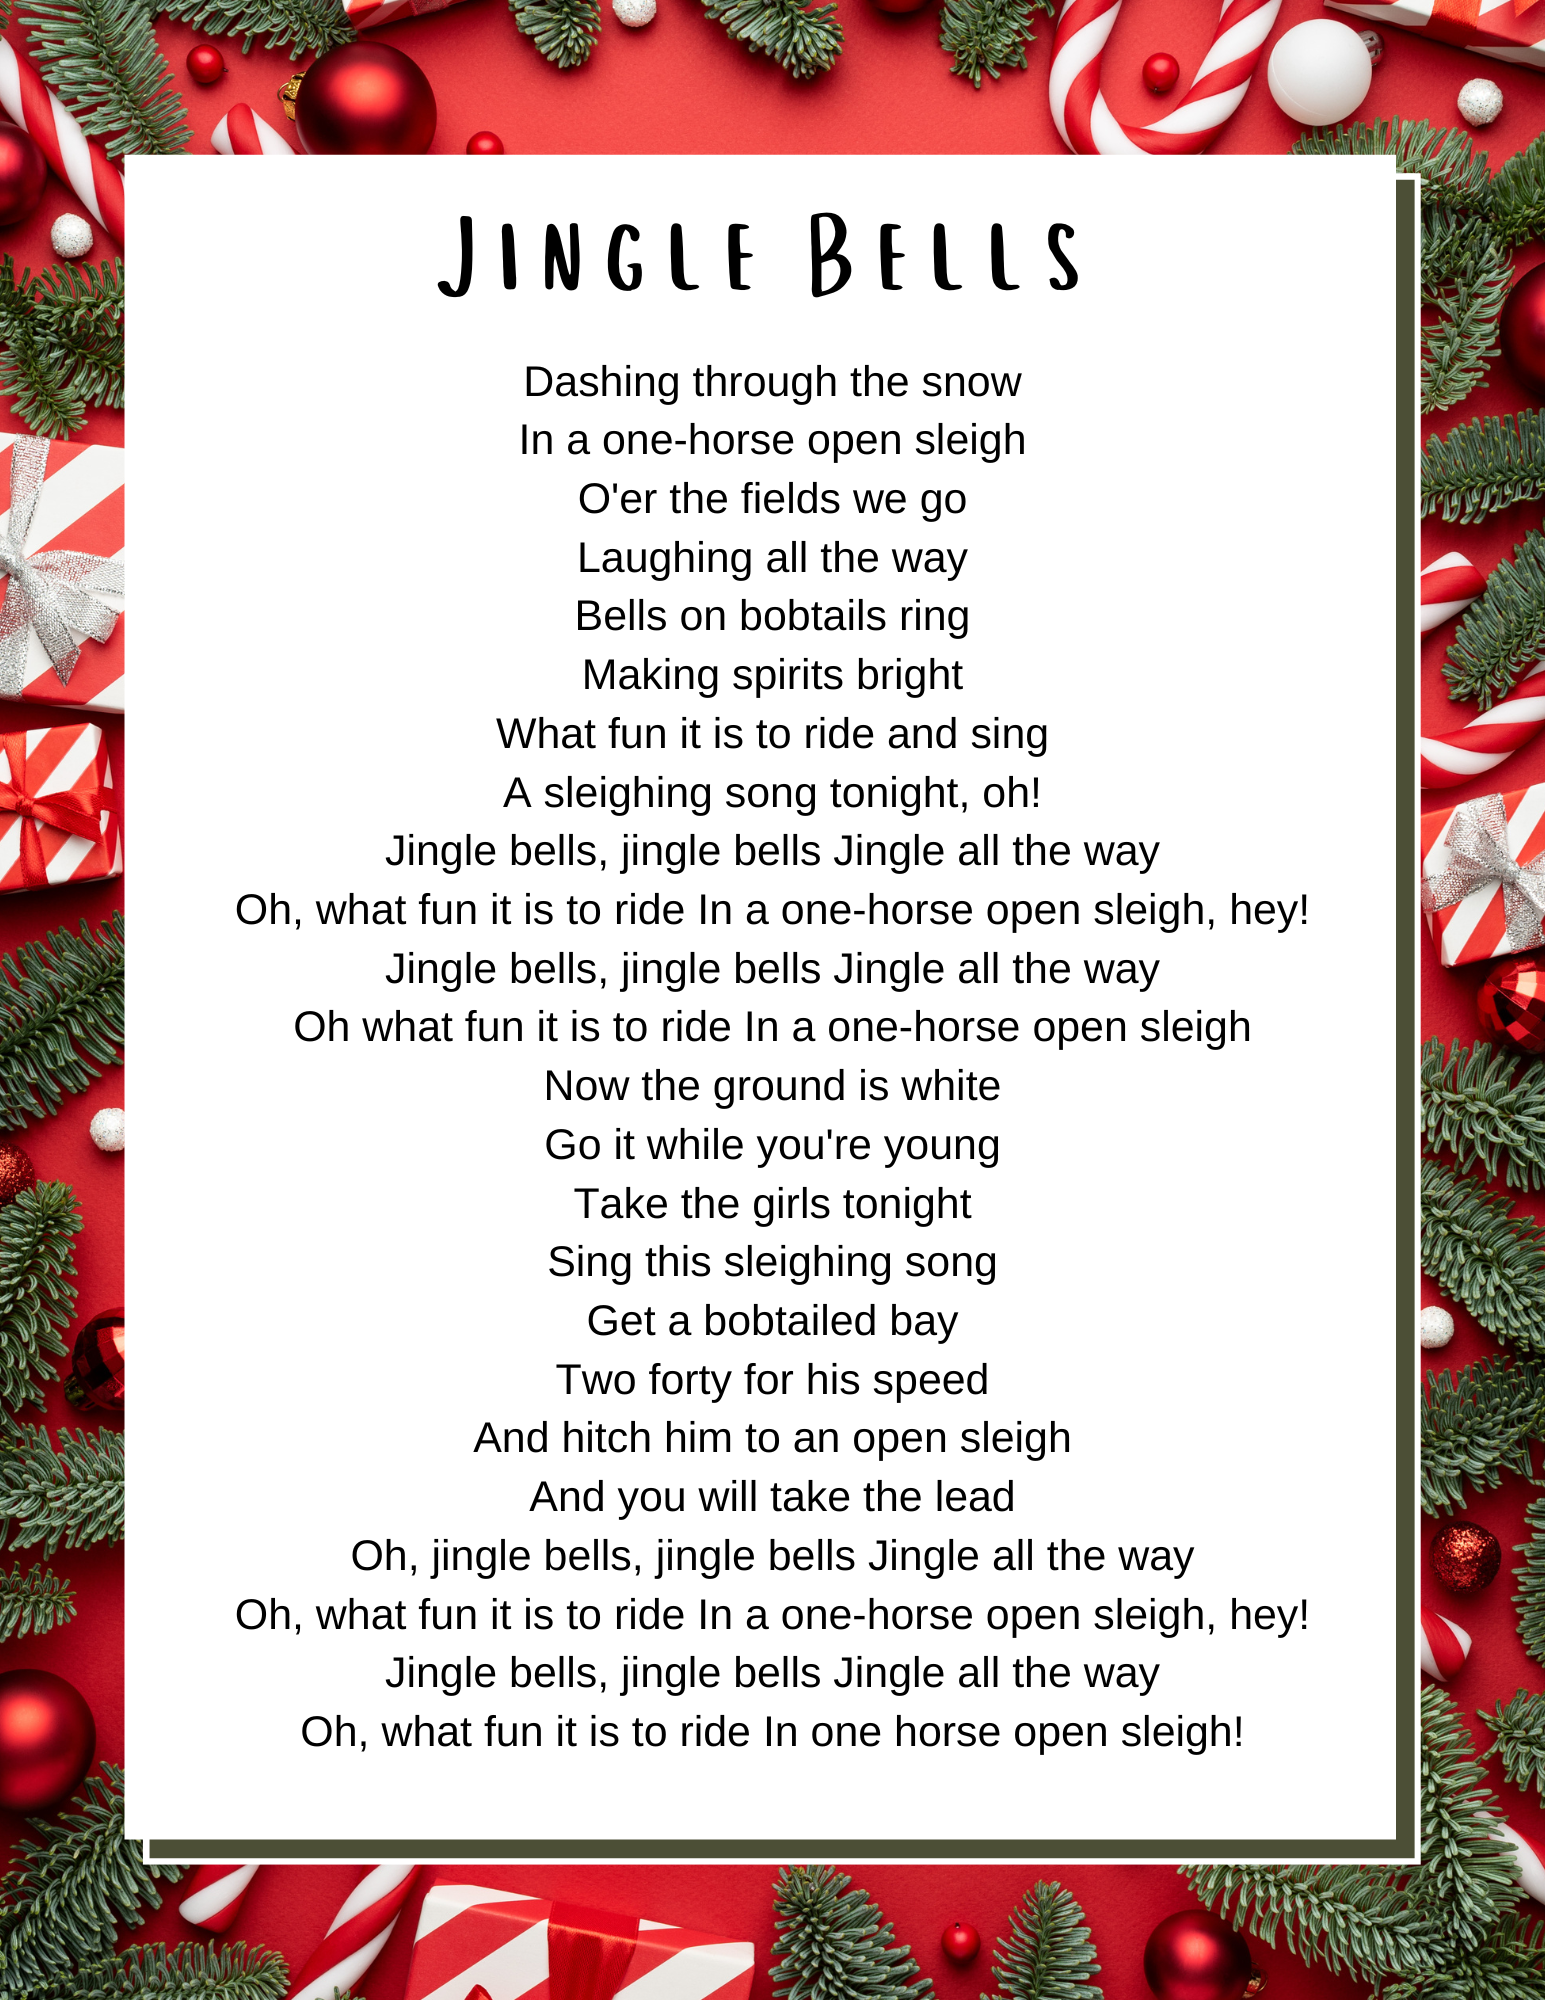 Jingle Bell Rock with Lyrics  Classic Christmas Songs 